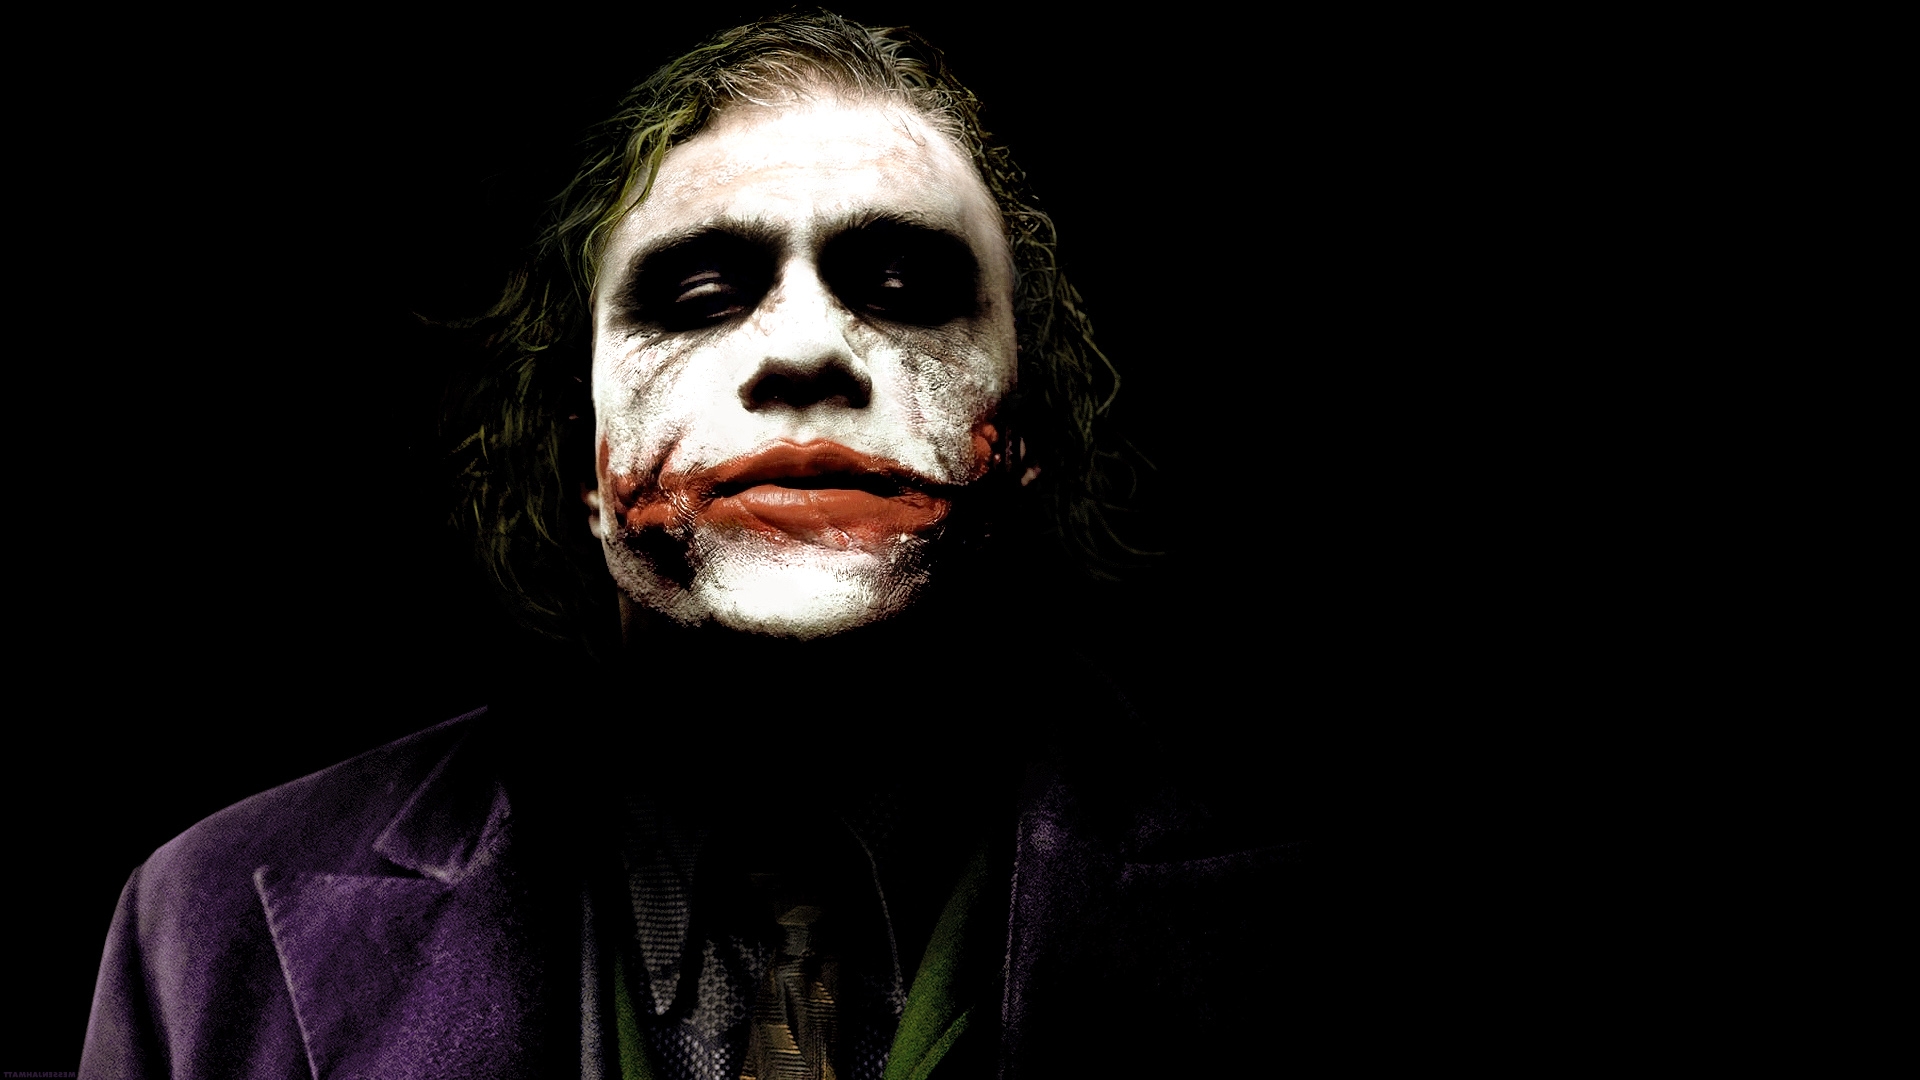 Download hd wallpapers of Joker The Dark Knight Movie Free